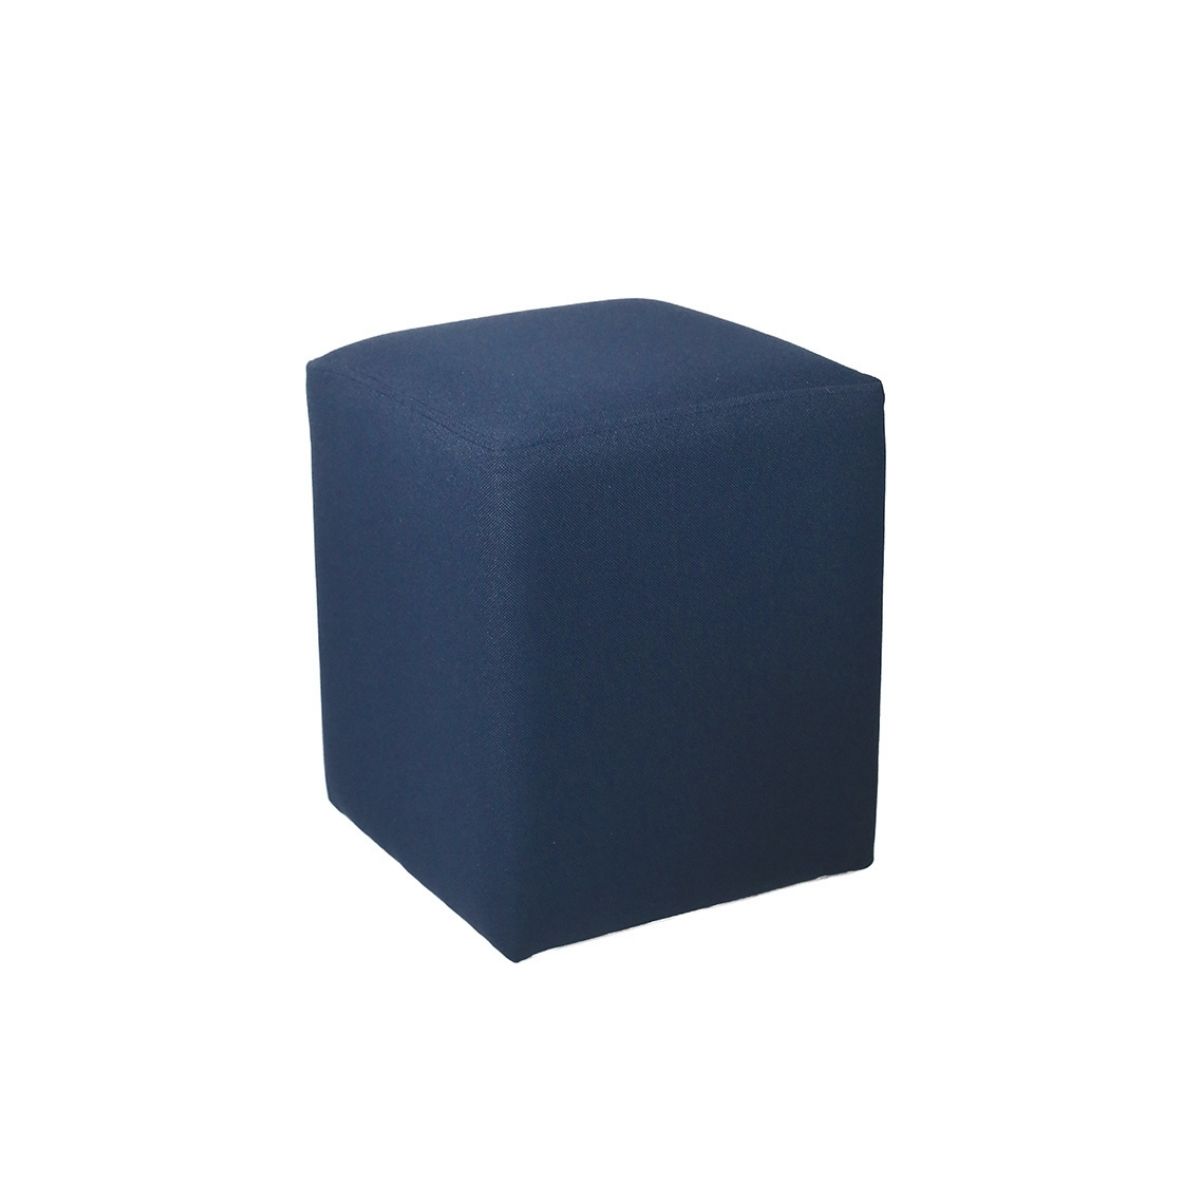 Cube Ottoman Navy blue